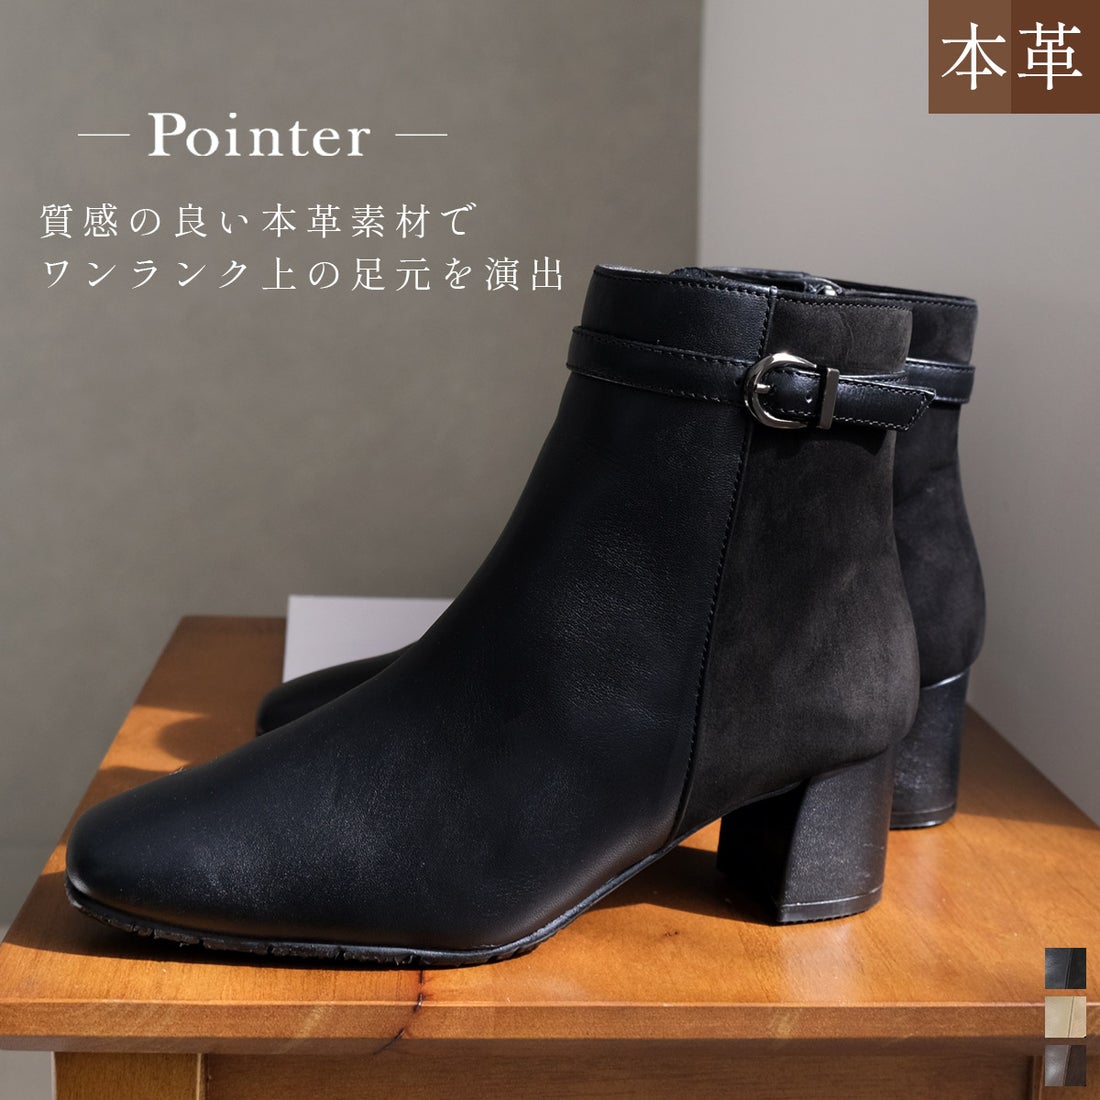 pointer 【本革】ショートブーツ 異素材 レディース しなやか 歩き